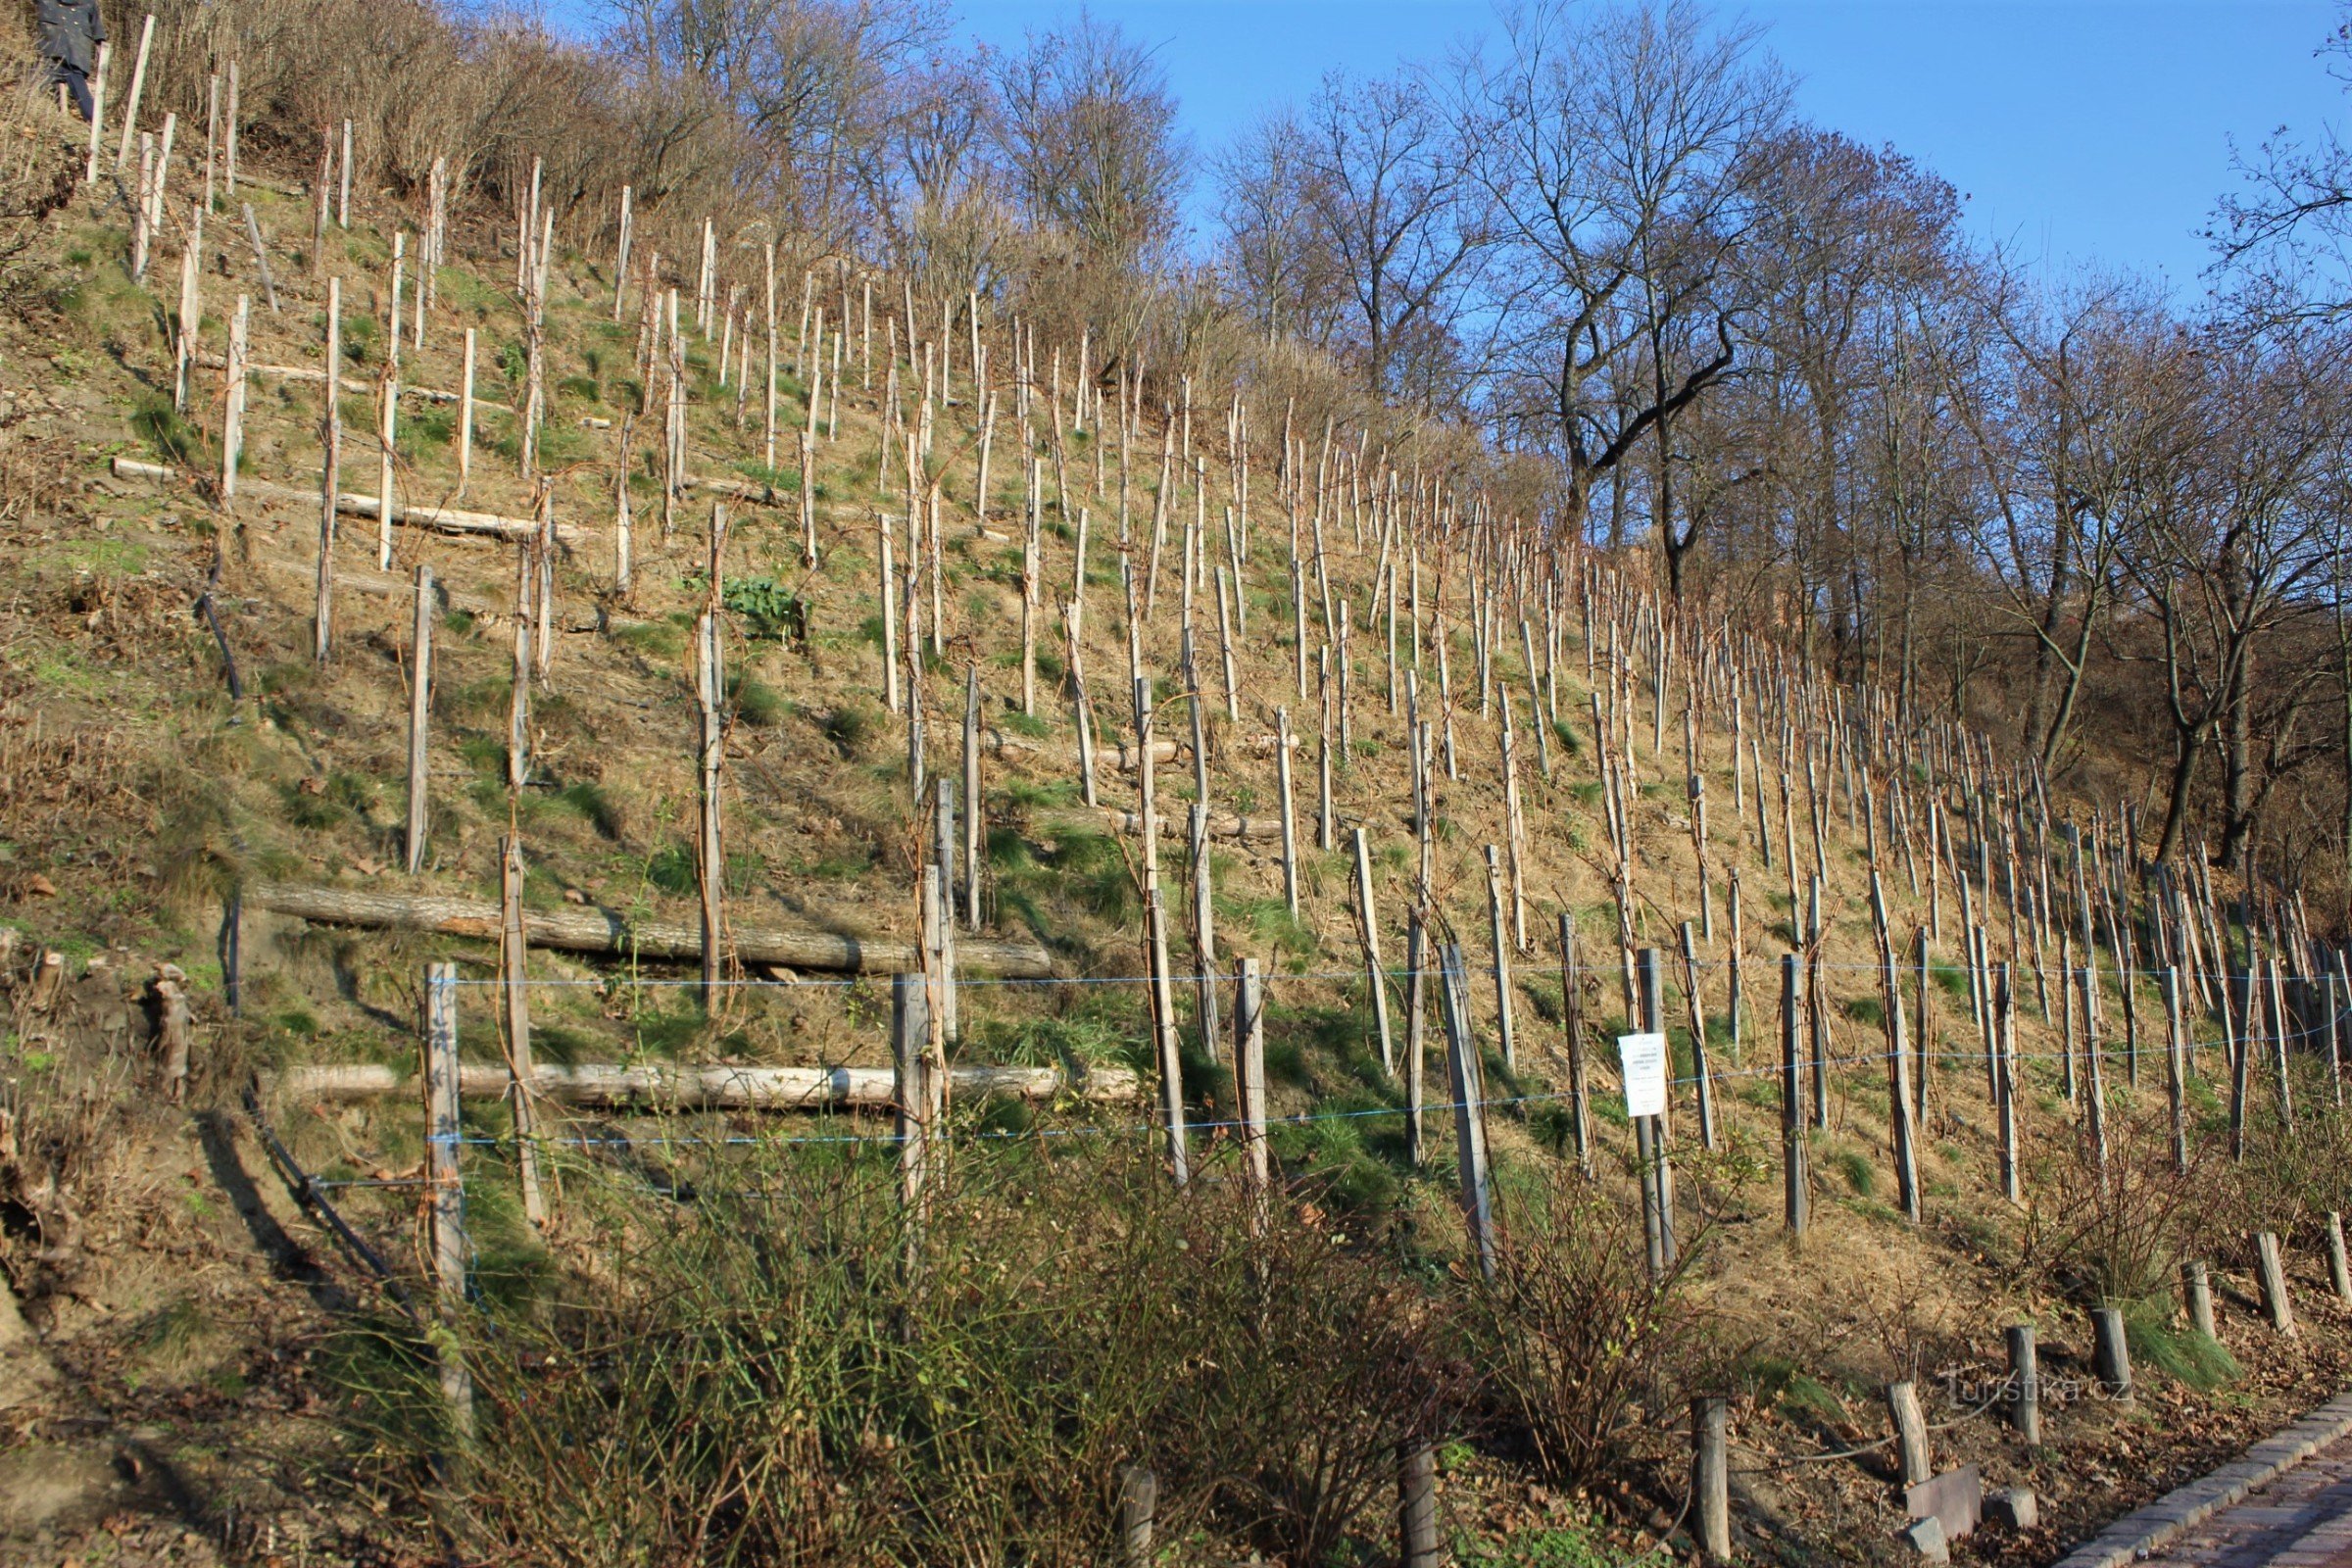 General view of the vineyard